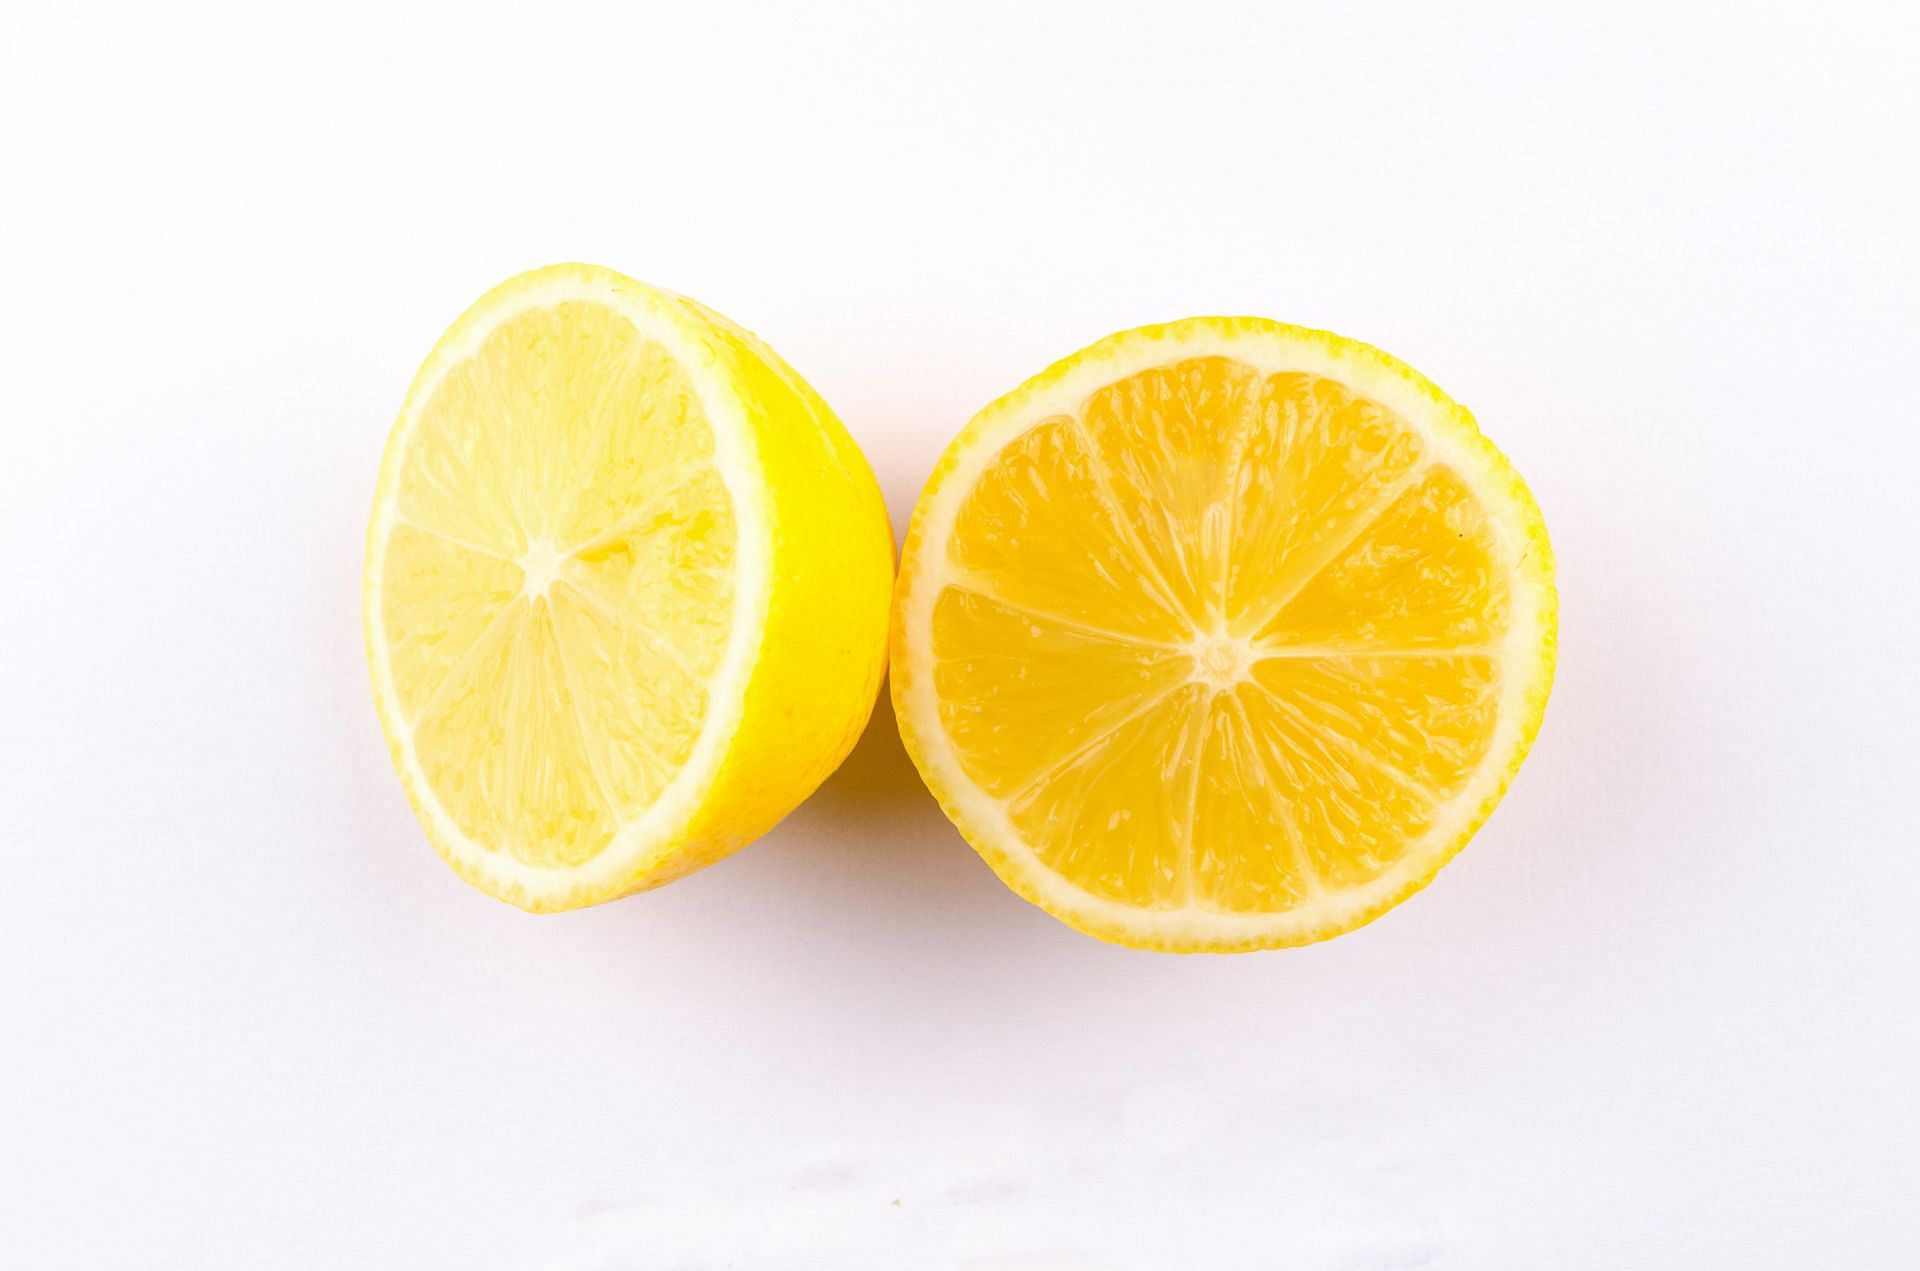 Lemon essential oil is used for its anti-microbial properties. (Image via Pexels/Lukas)